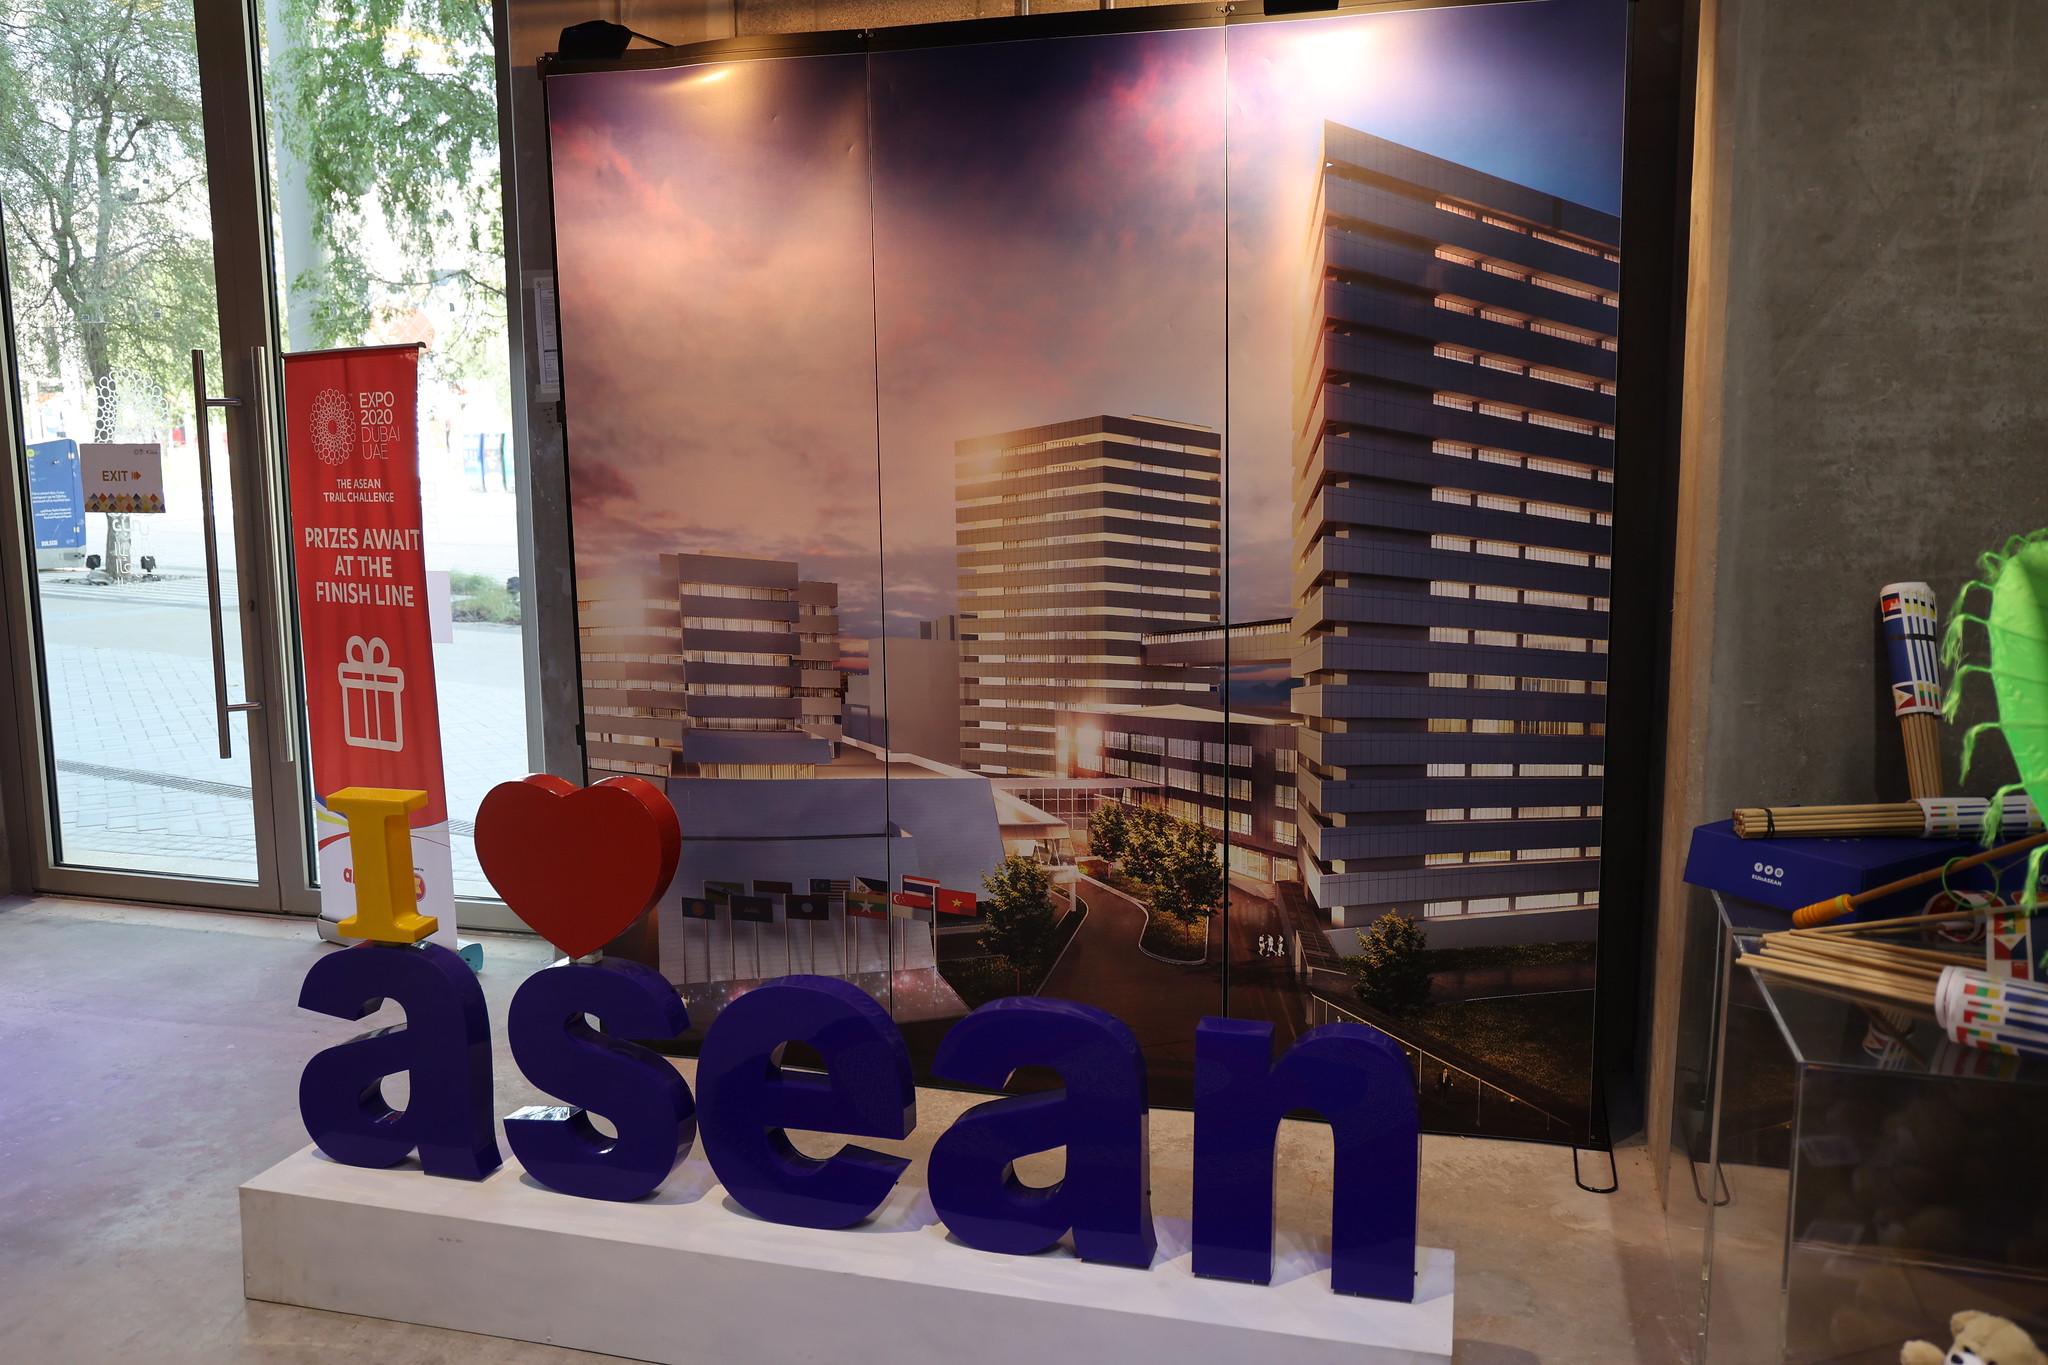 ASEAN counts down to Expo 2020 Dubai: 3 days to go! - ASEAN Main Portal